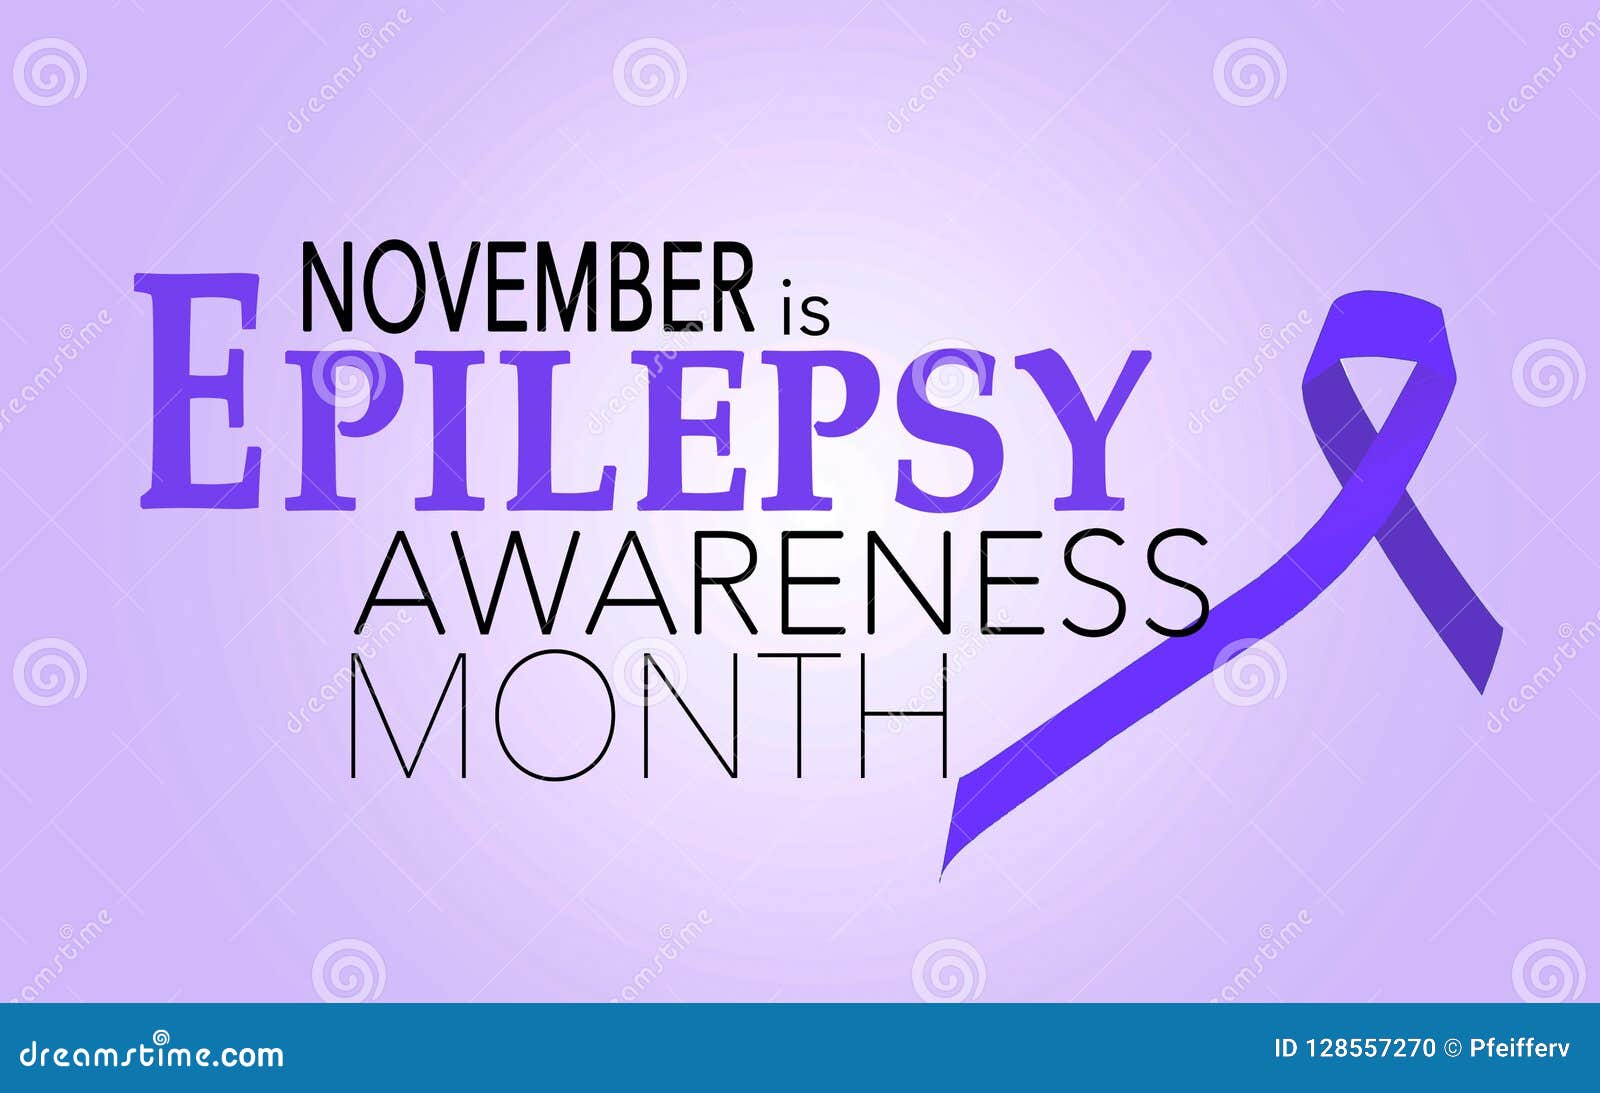 november is epilepsy awareness month